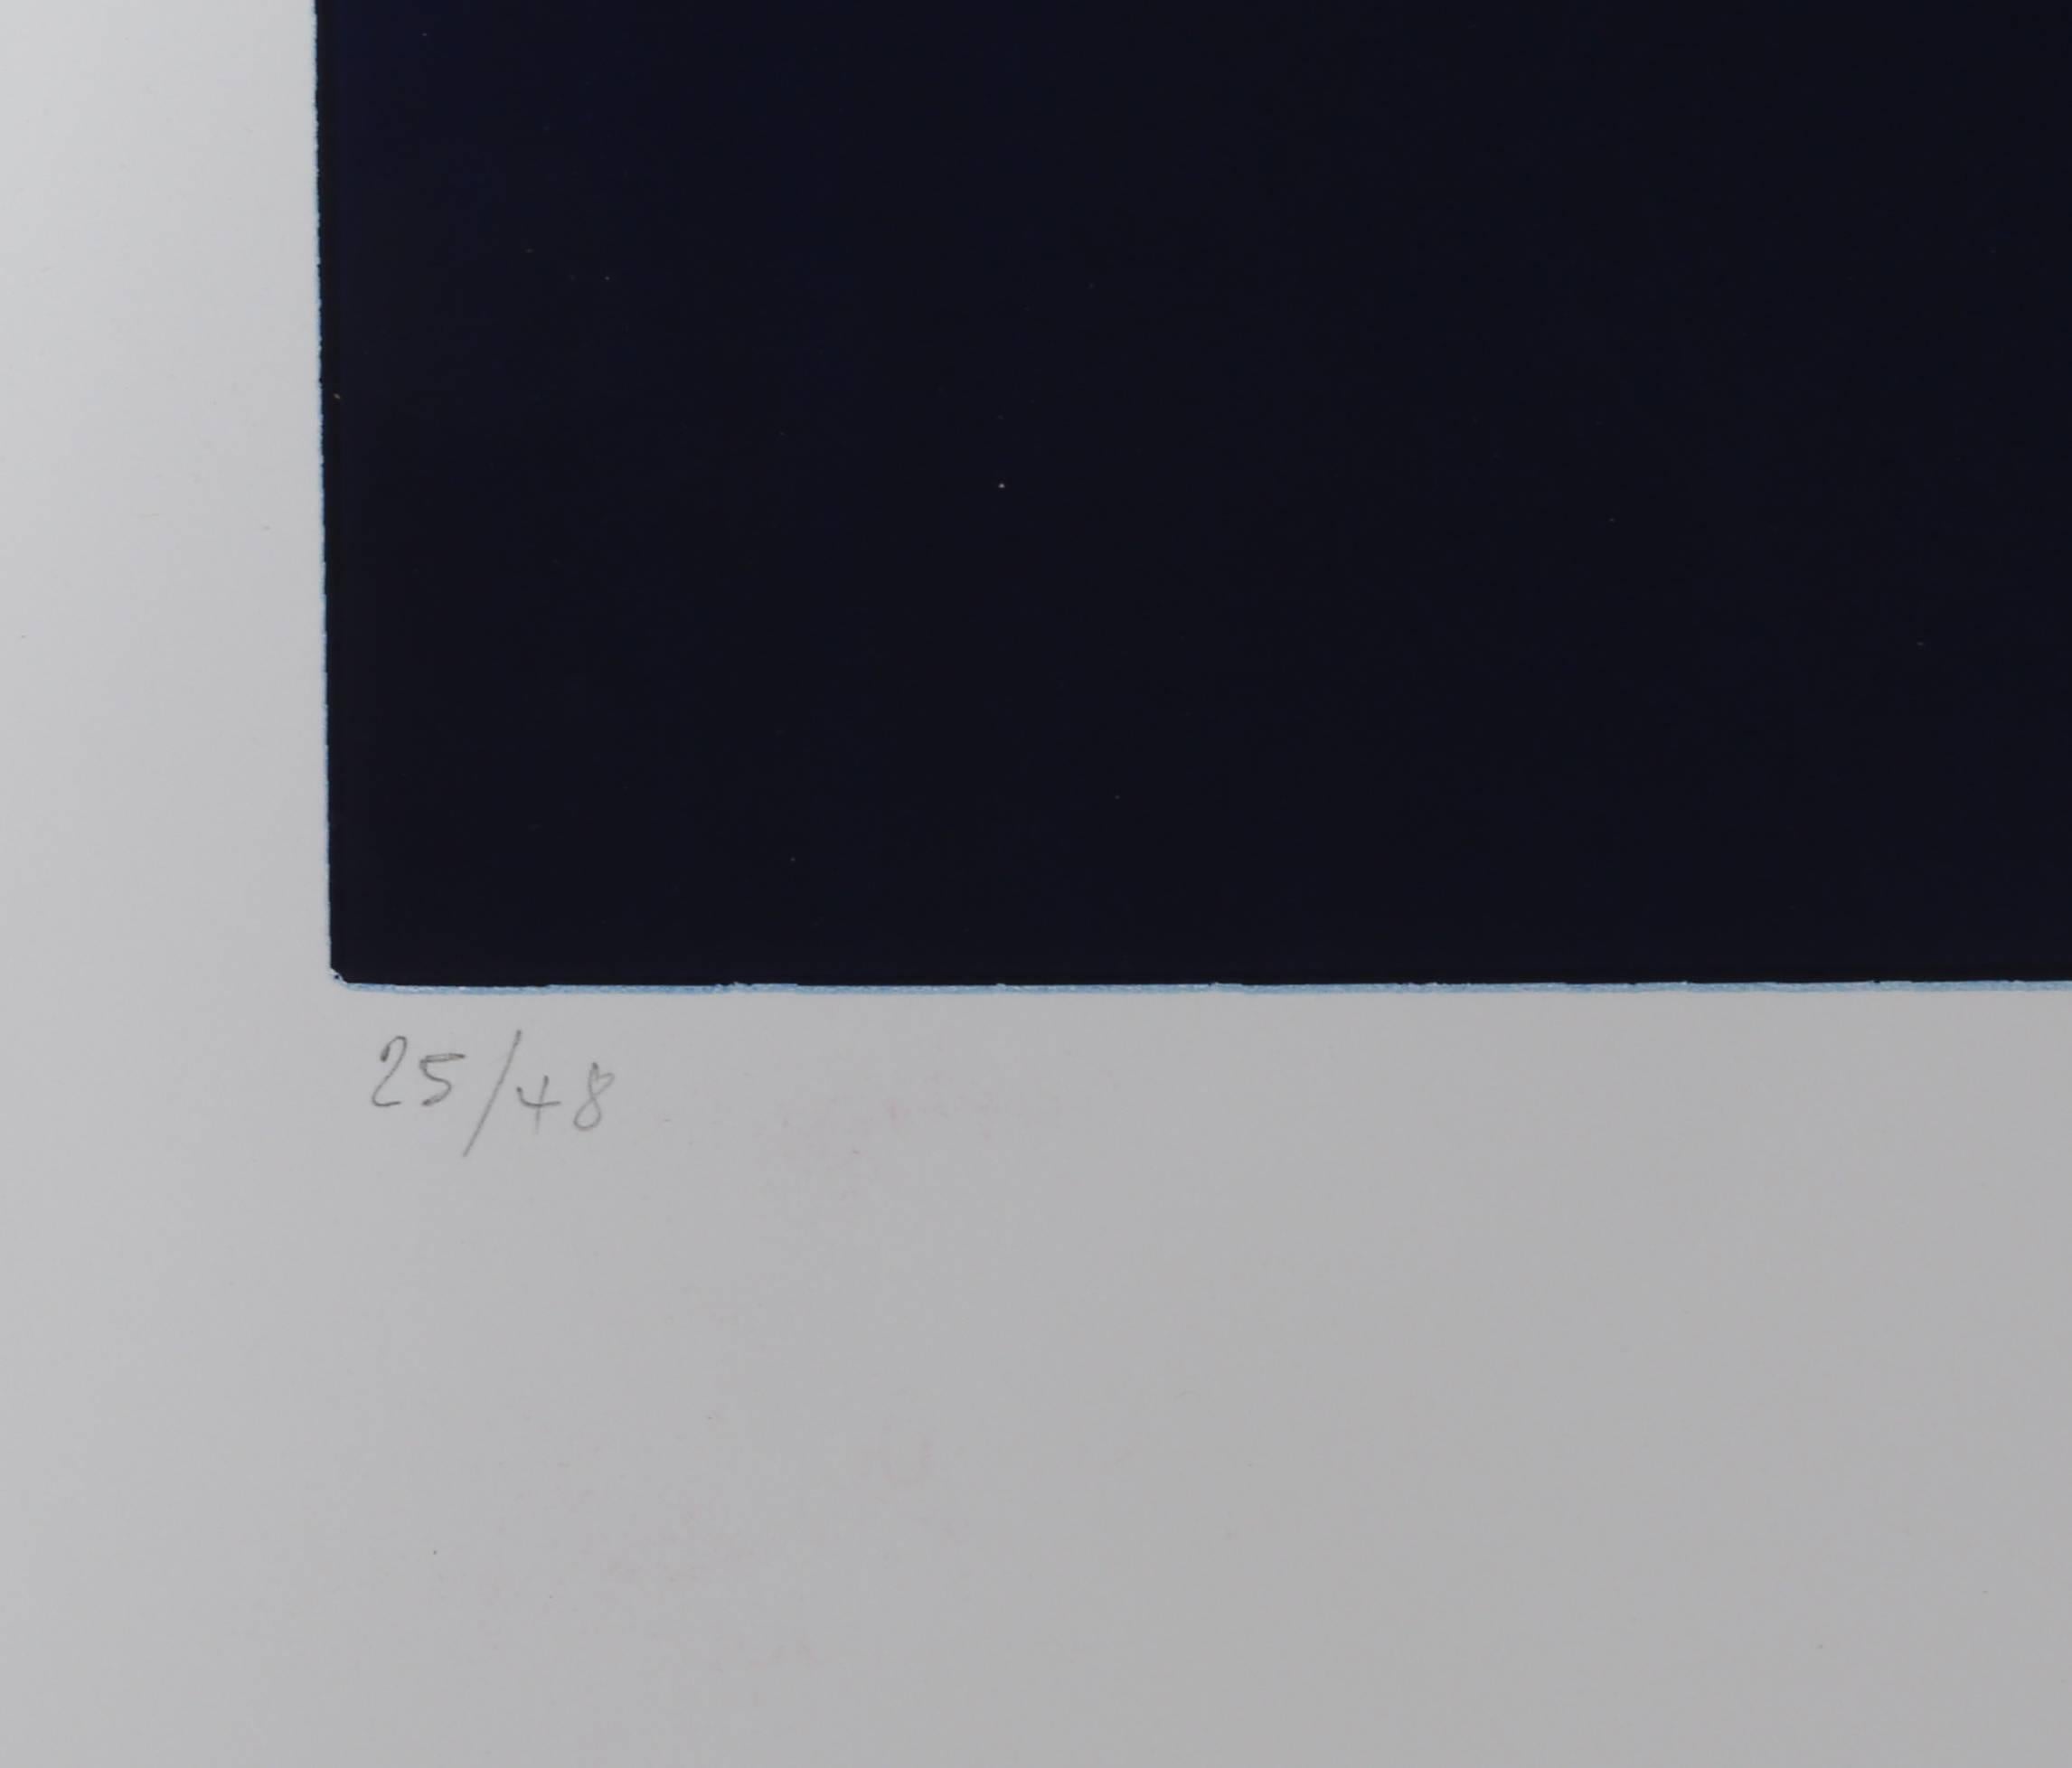 Barnett Newman: The Paintings (Blau), Abstrakter Siebdruck von David Diao im Angebot 2